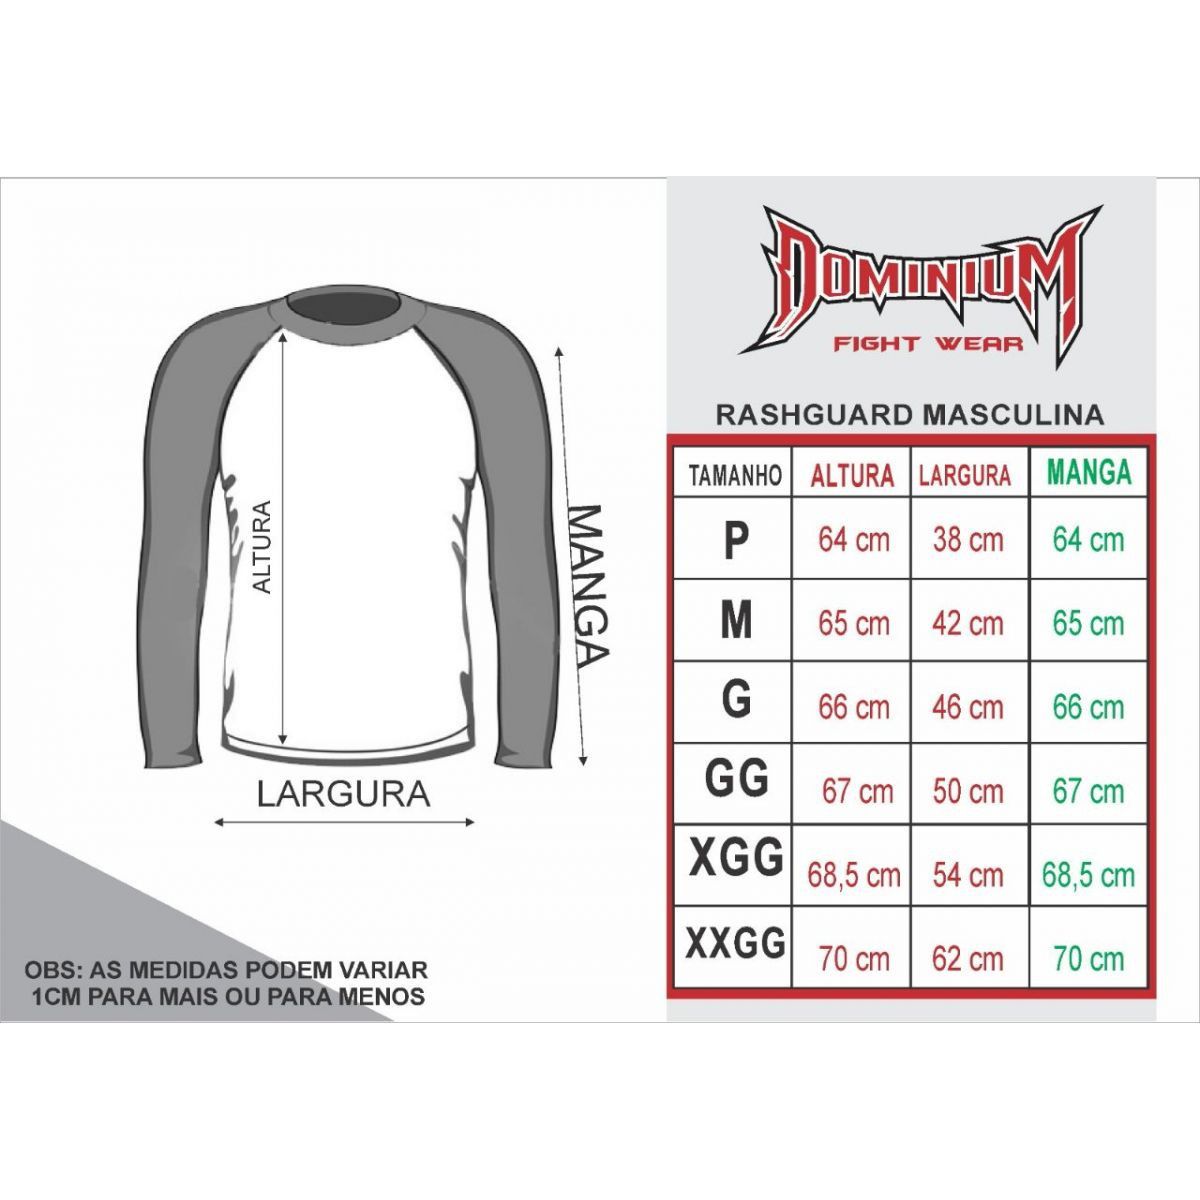 Camisa Rash Guard - Manga Longa - Preto/Vermelho - 2197 - Dominium -  - Loja do Competidor